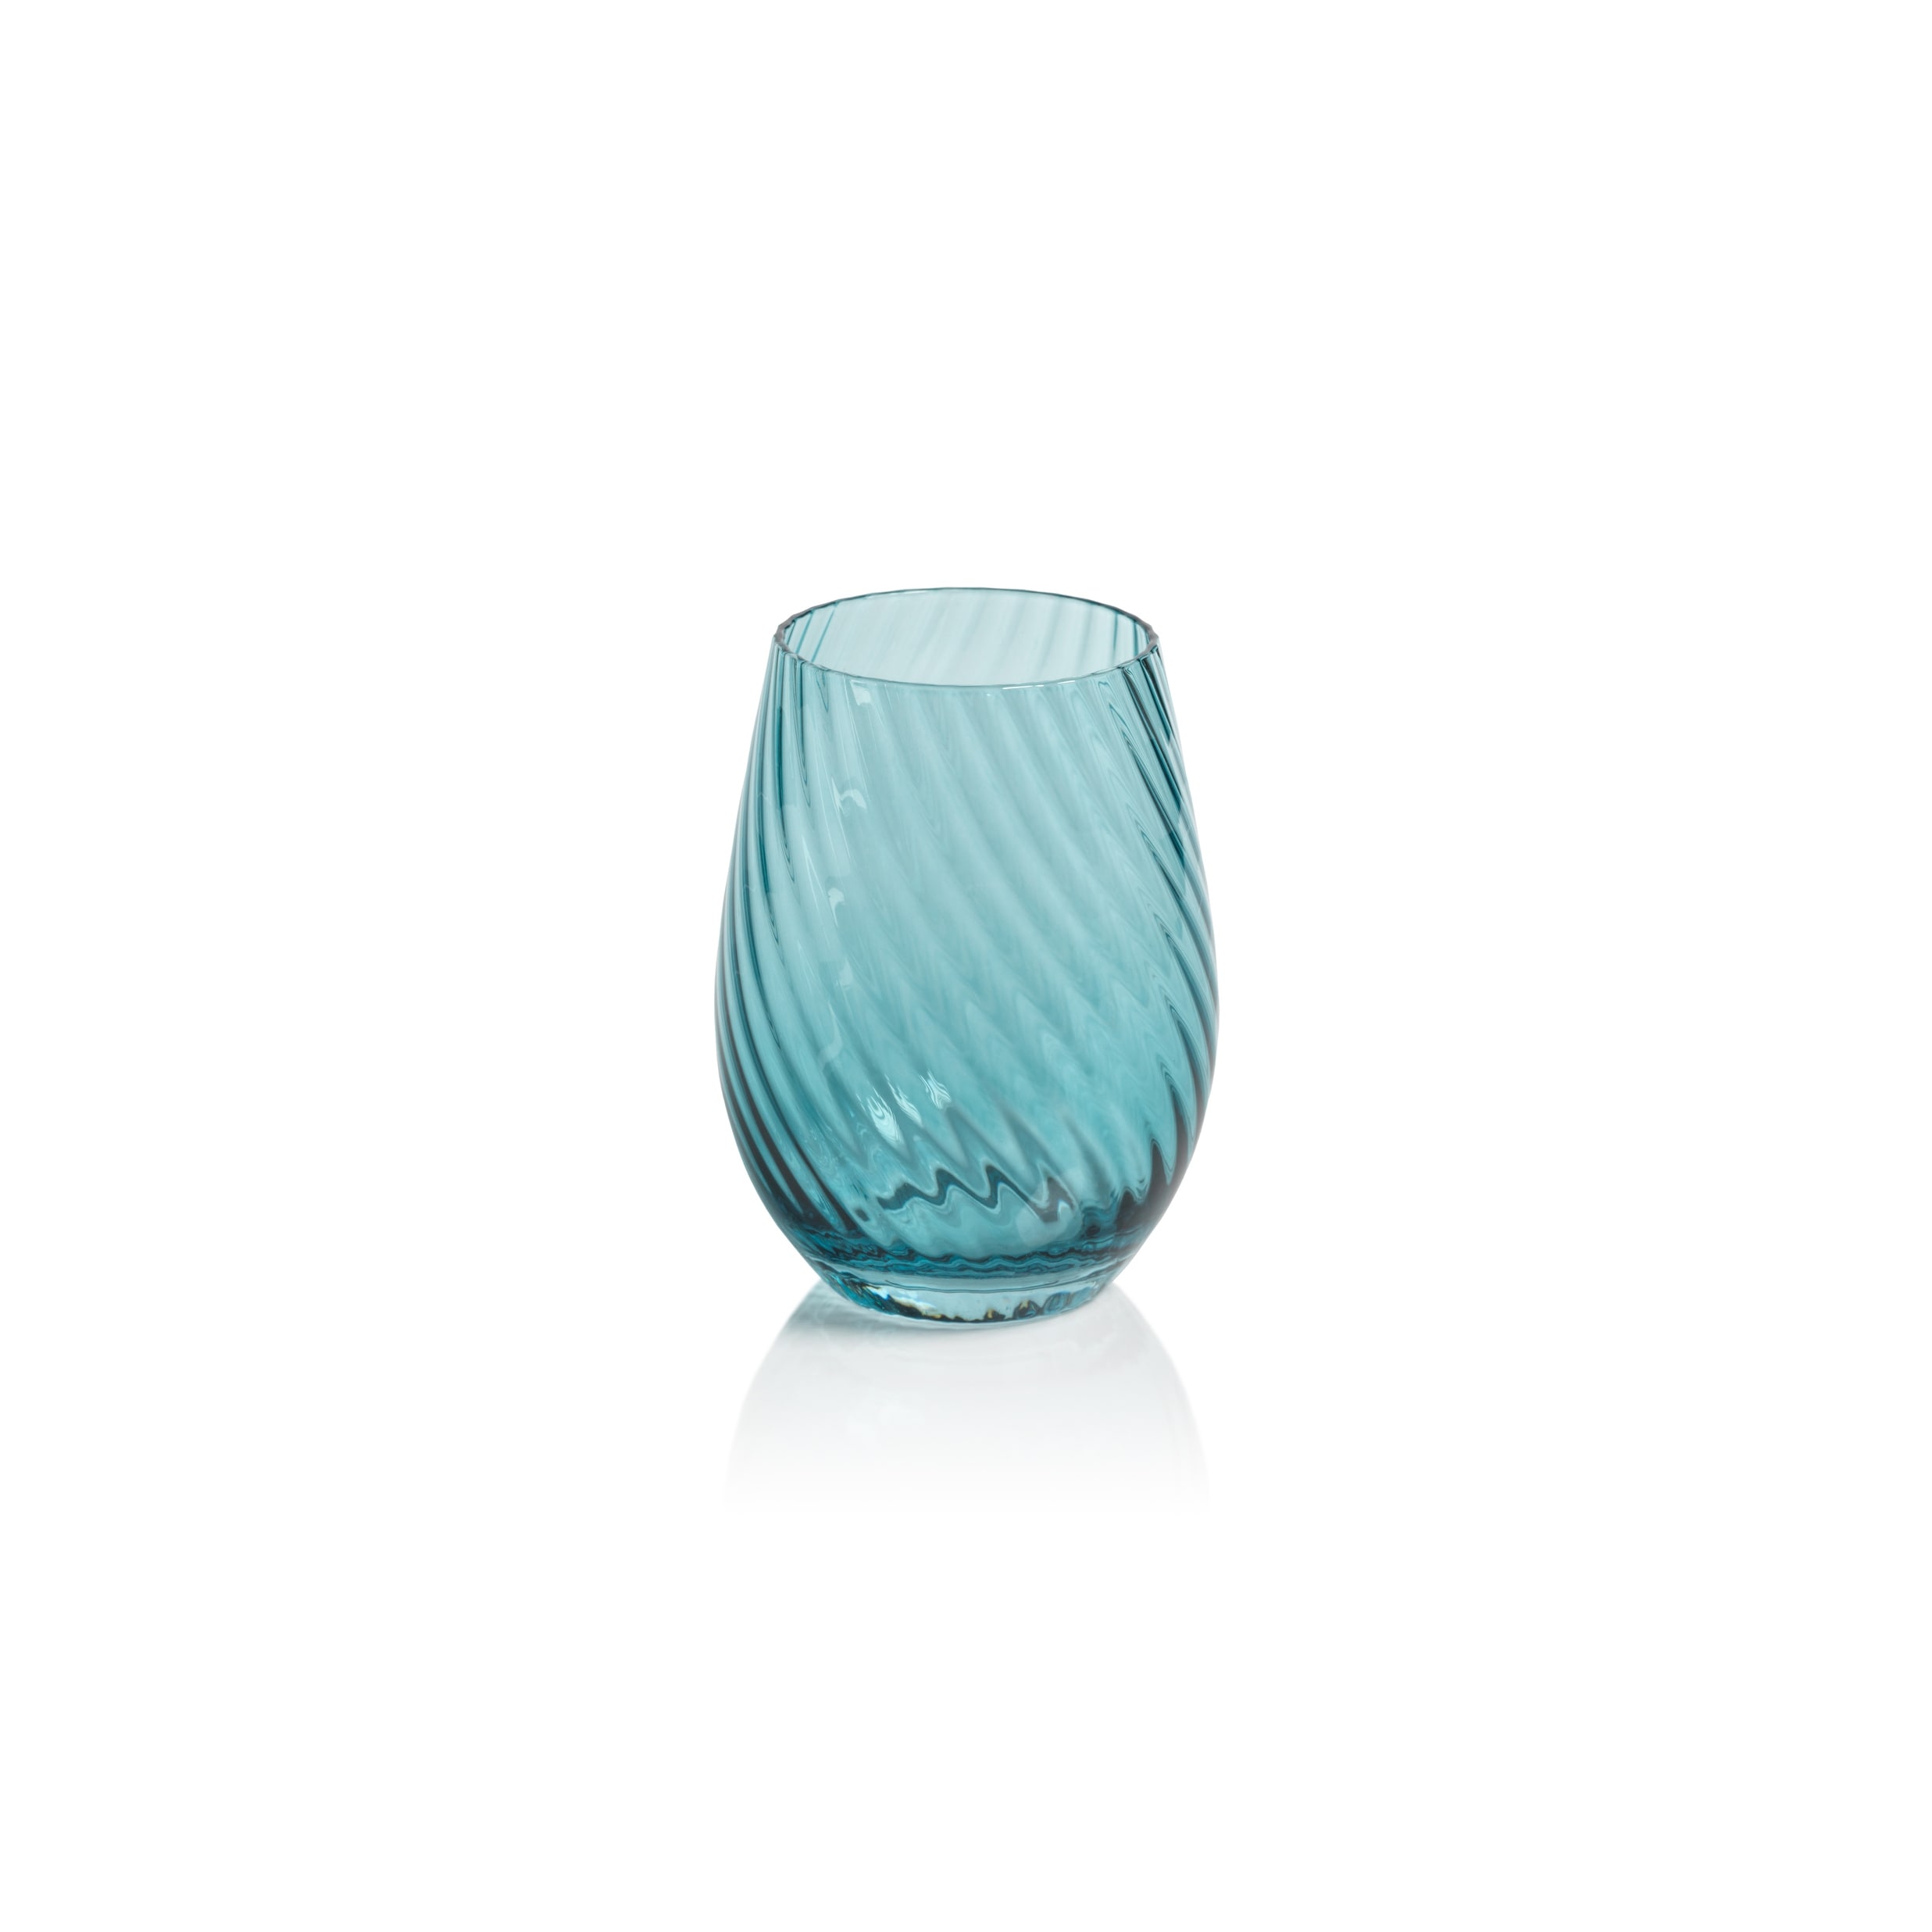 Swirl Stemless Wine Glass